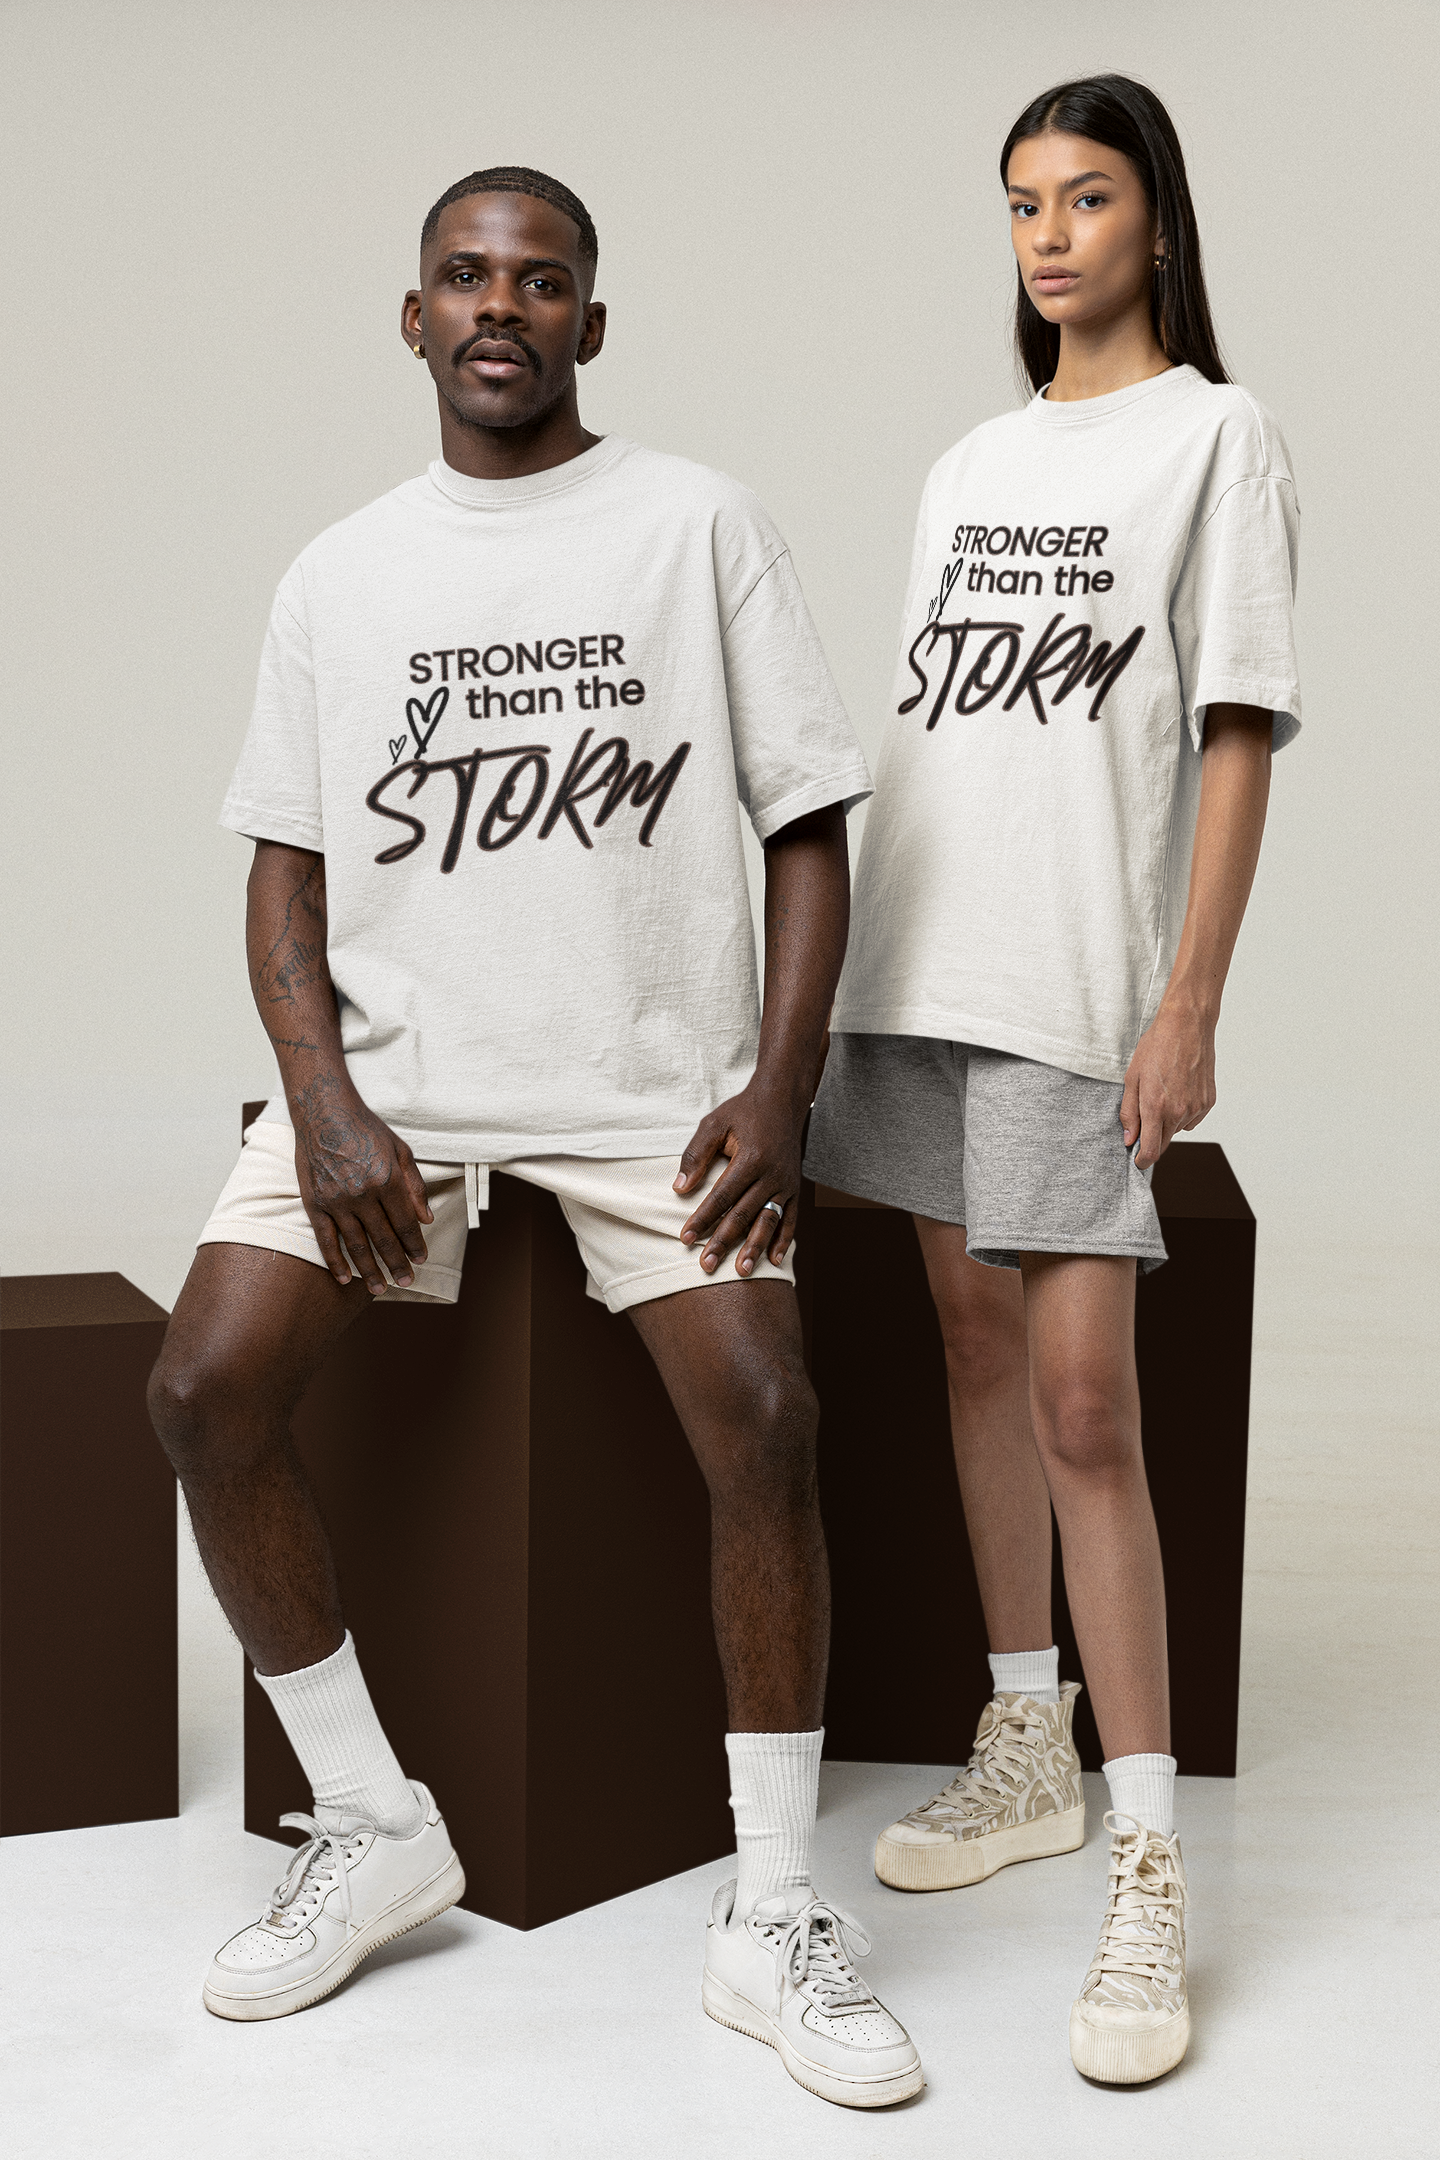 "Stronger Than The Storm" Motivational Shirt